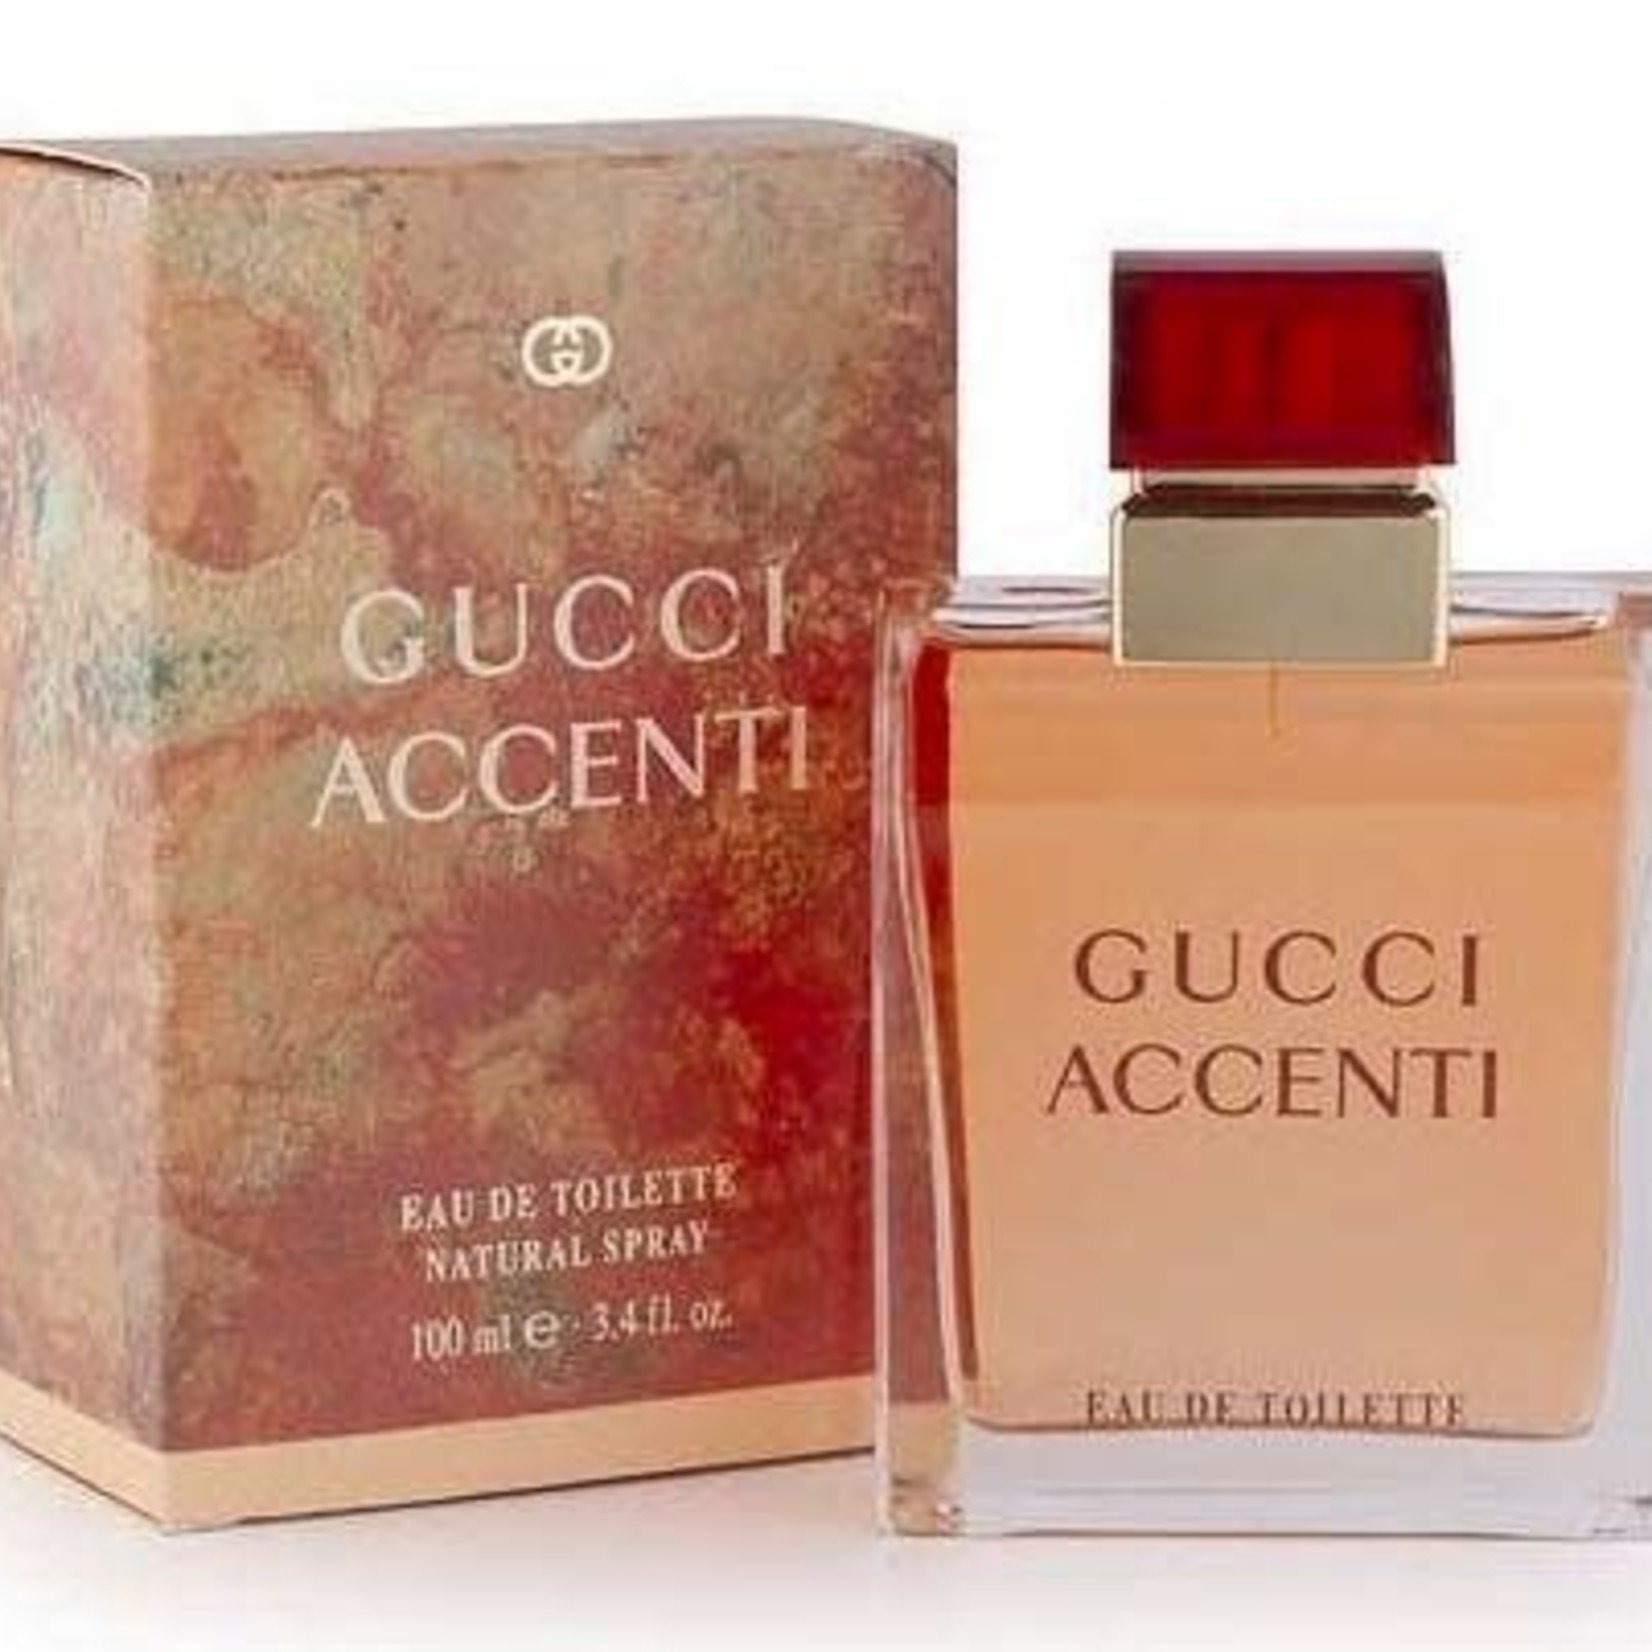 Gucci Gucci Accenti (Vintage 1995) Eau de Toilette